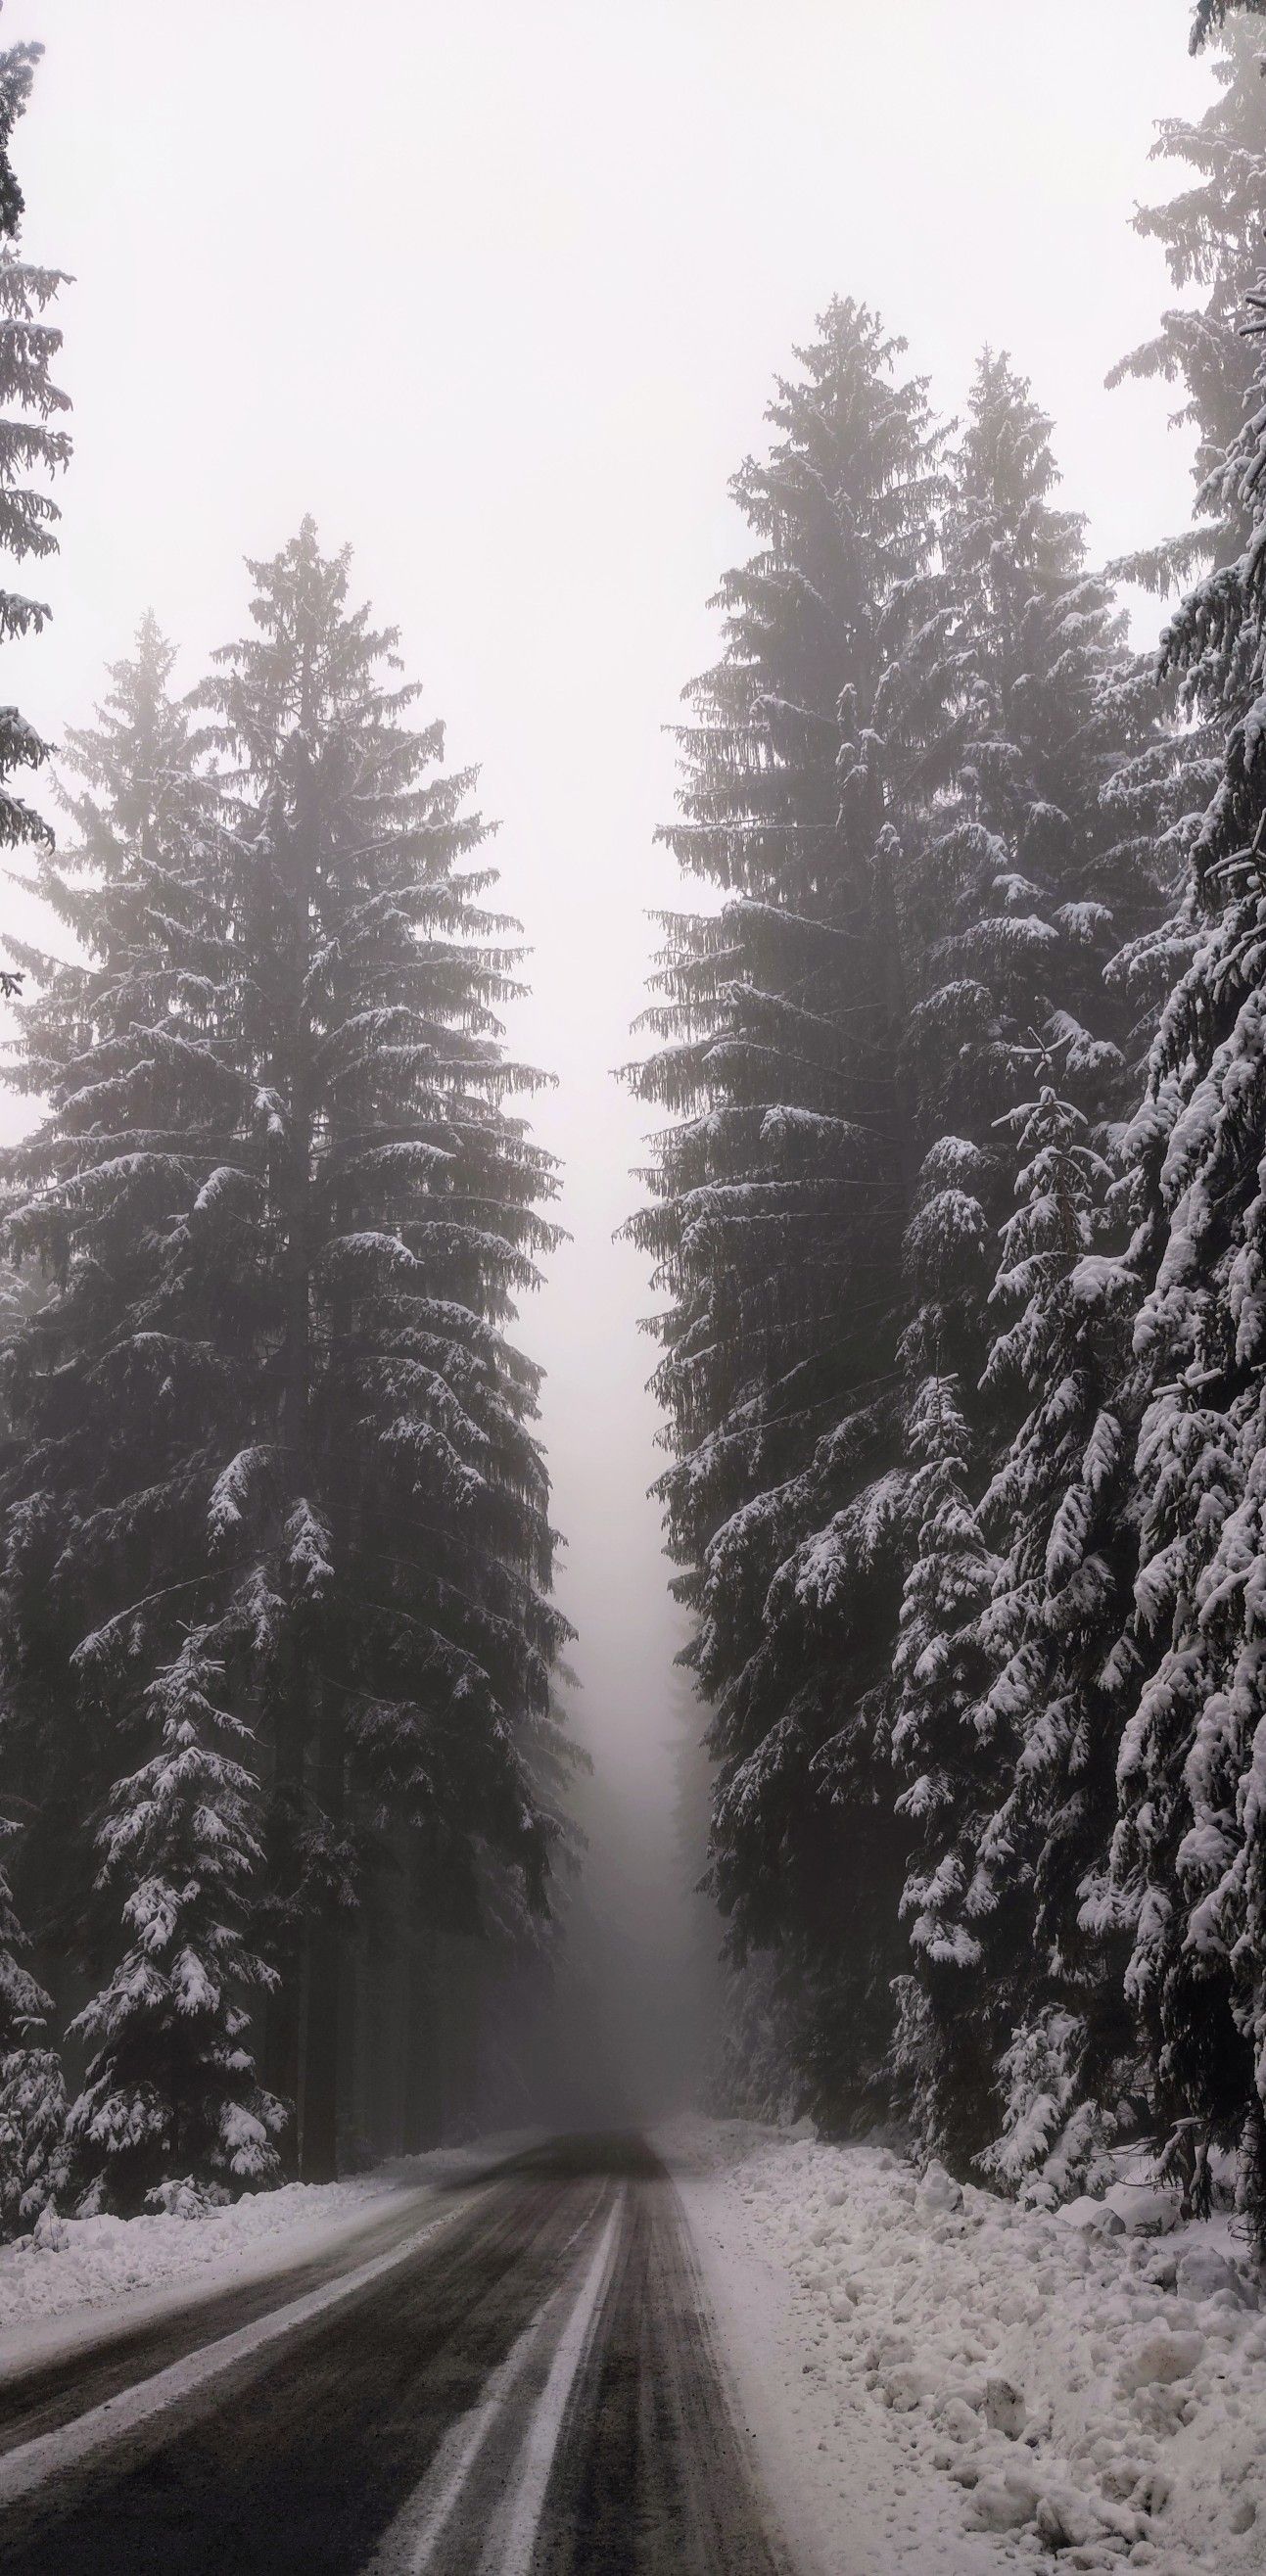 road to nowhere. Winter snow wallpaper, iPhone wallpaper winter, Dark nature aesthetic